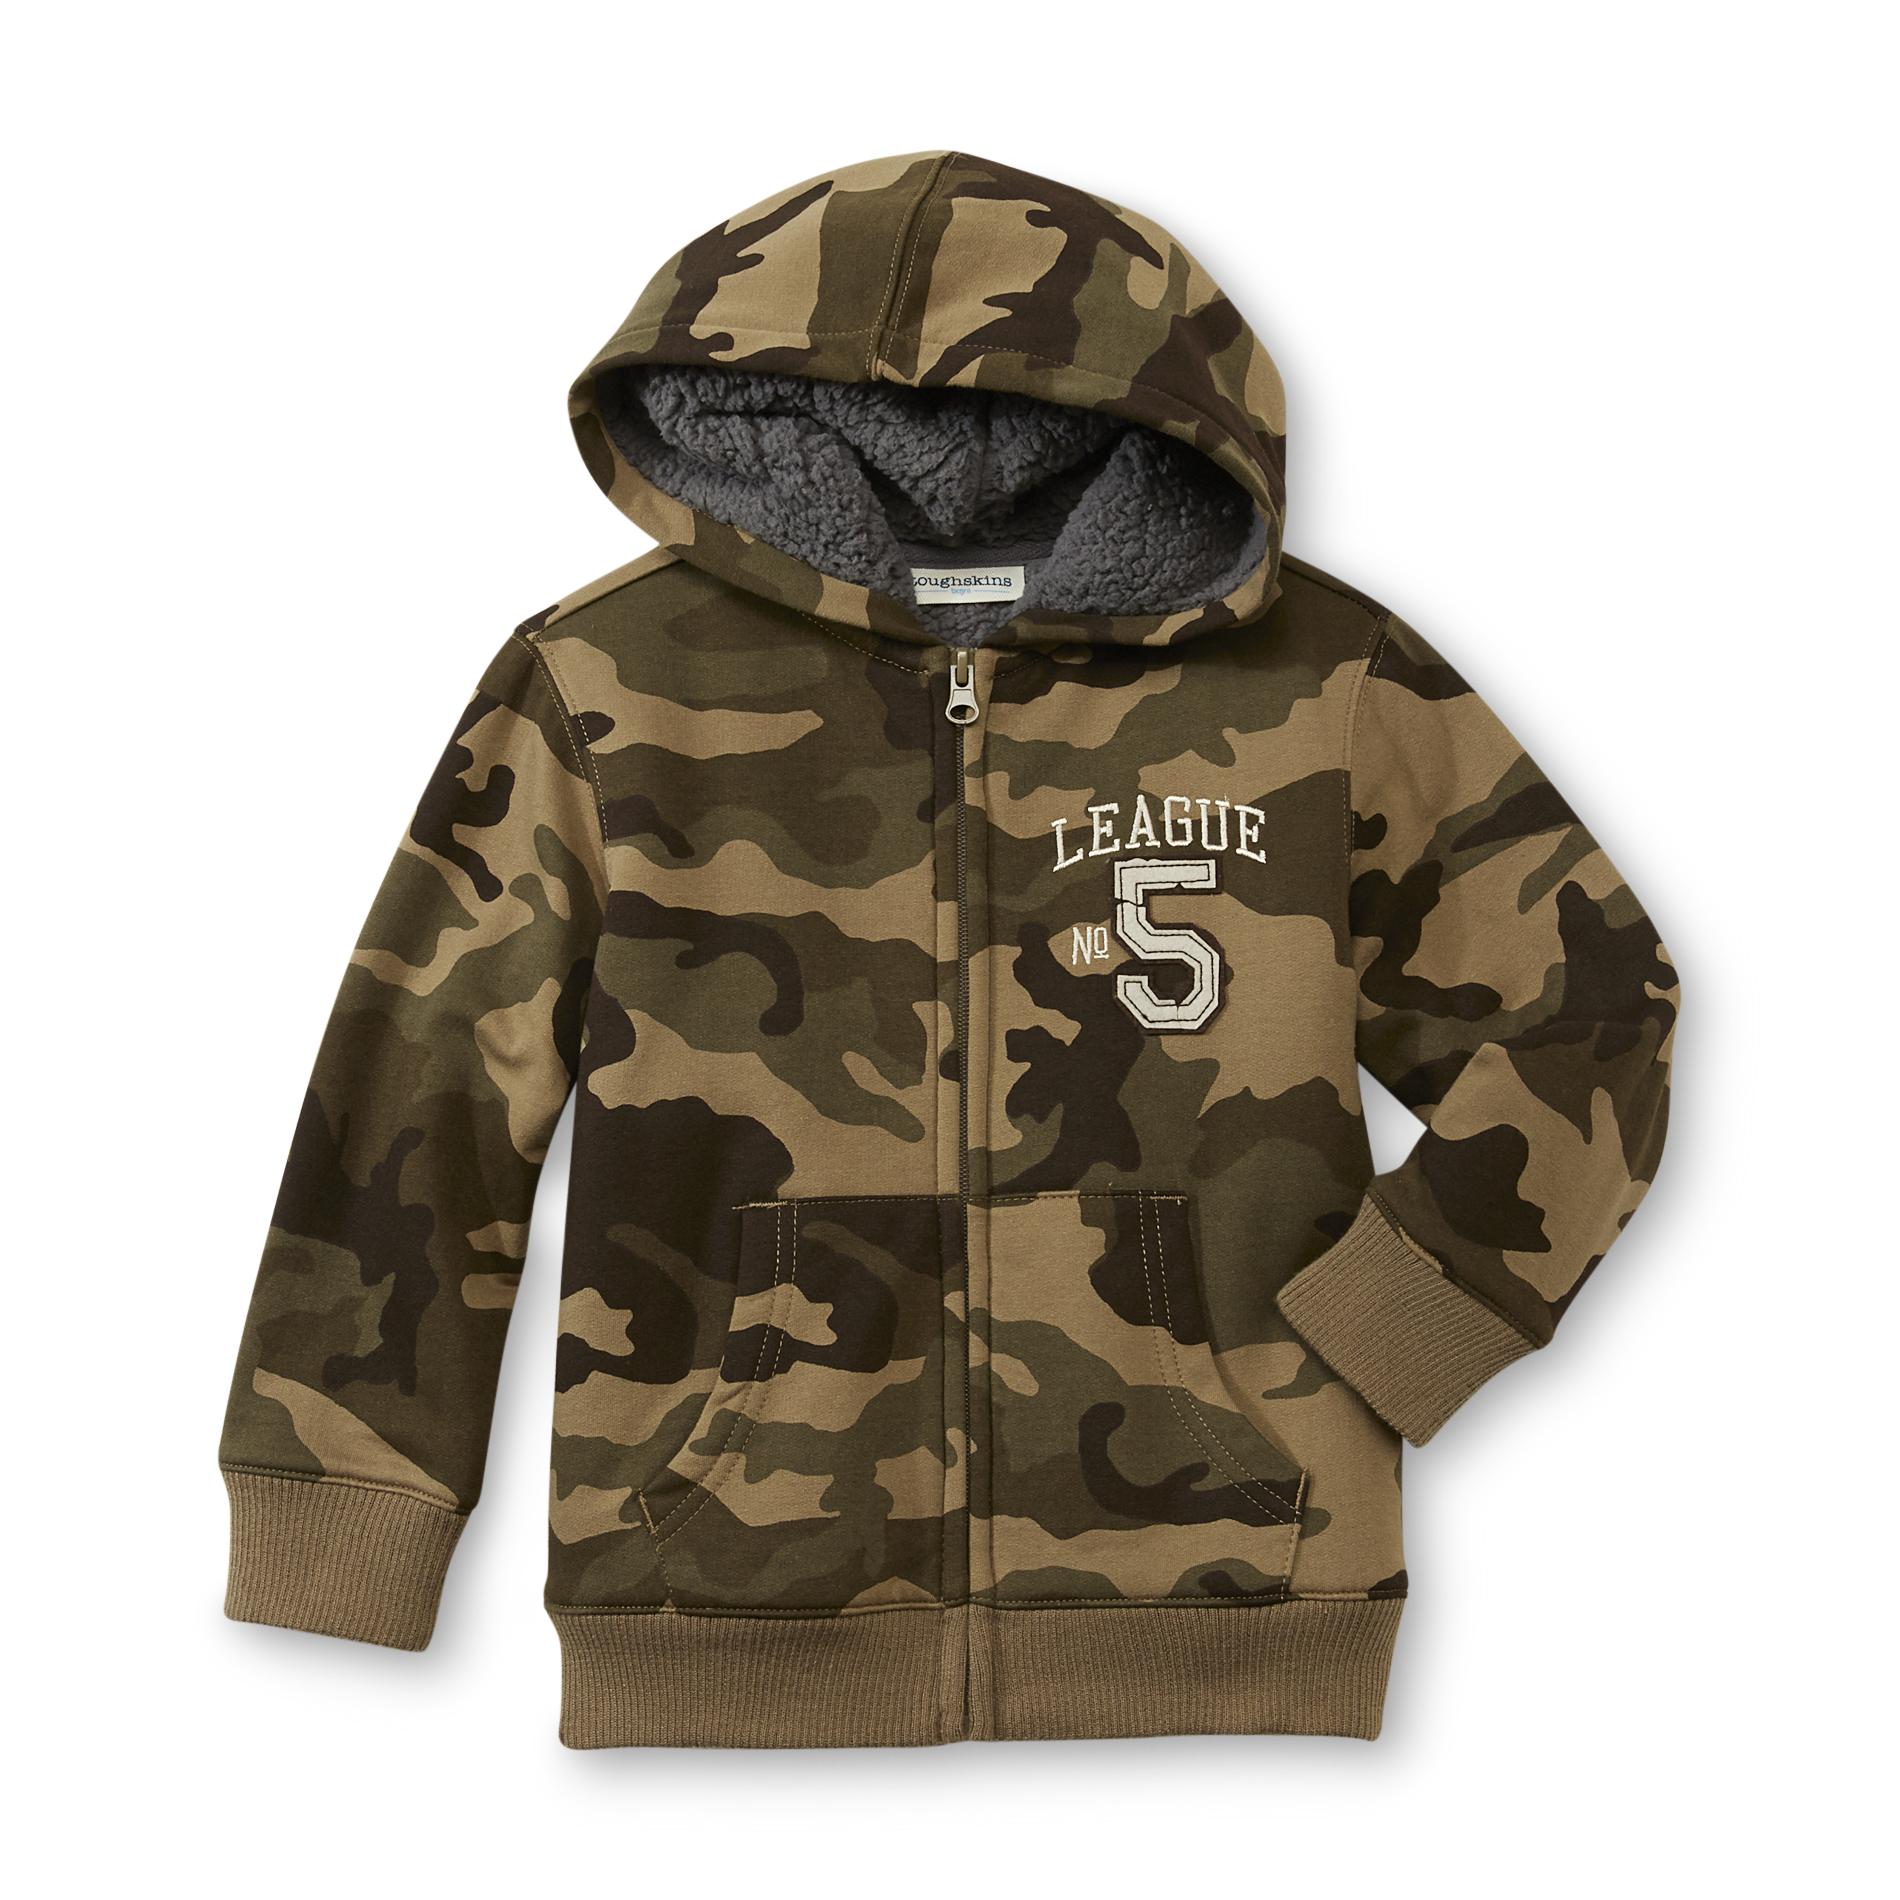 Toughskins Infant & Toddler Boy's Hoodie Jacket - Camouflage